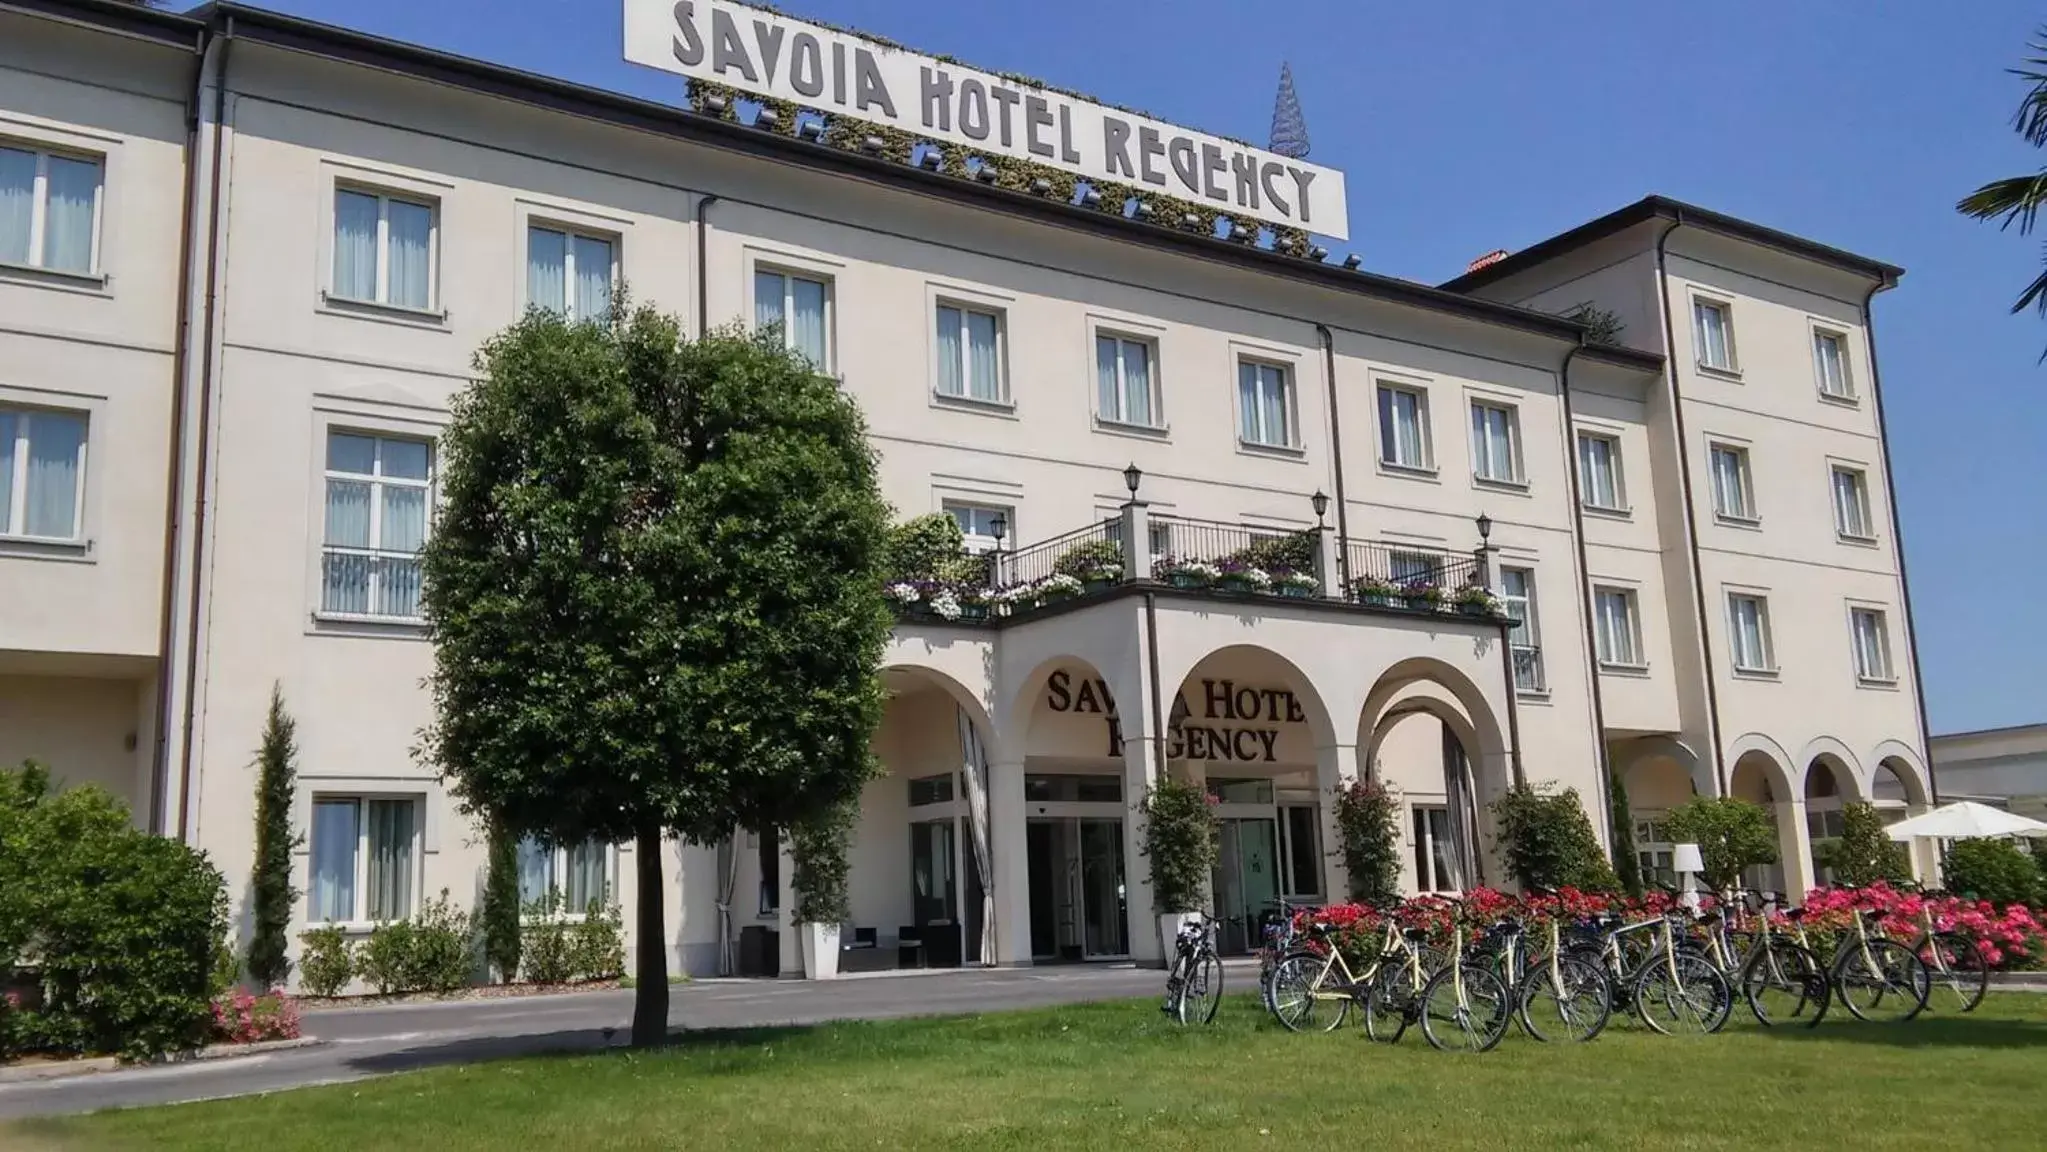 Property Building in Savoia Hotel Regency